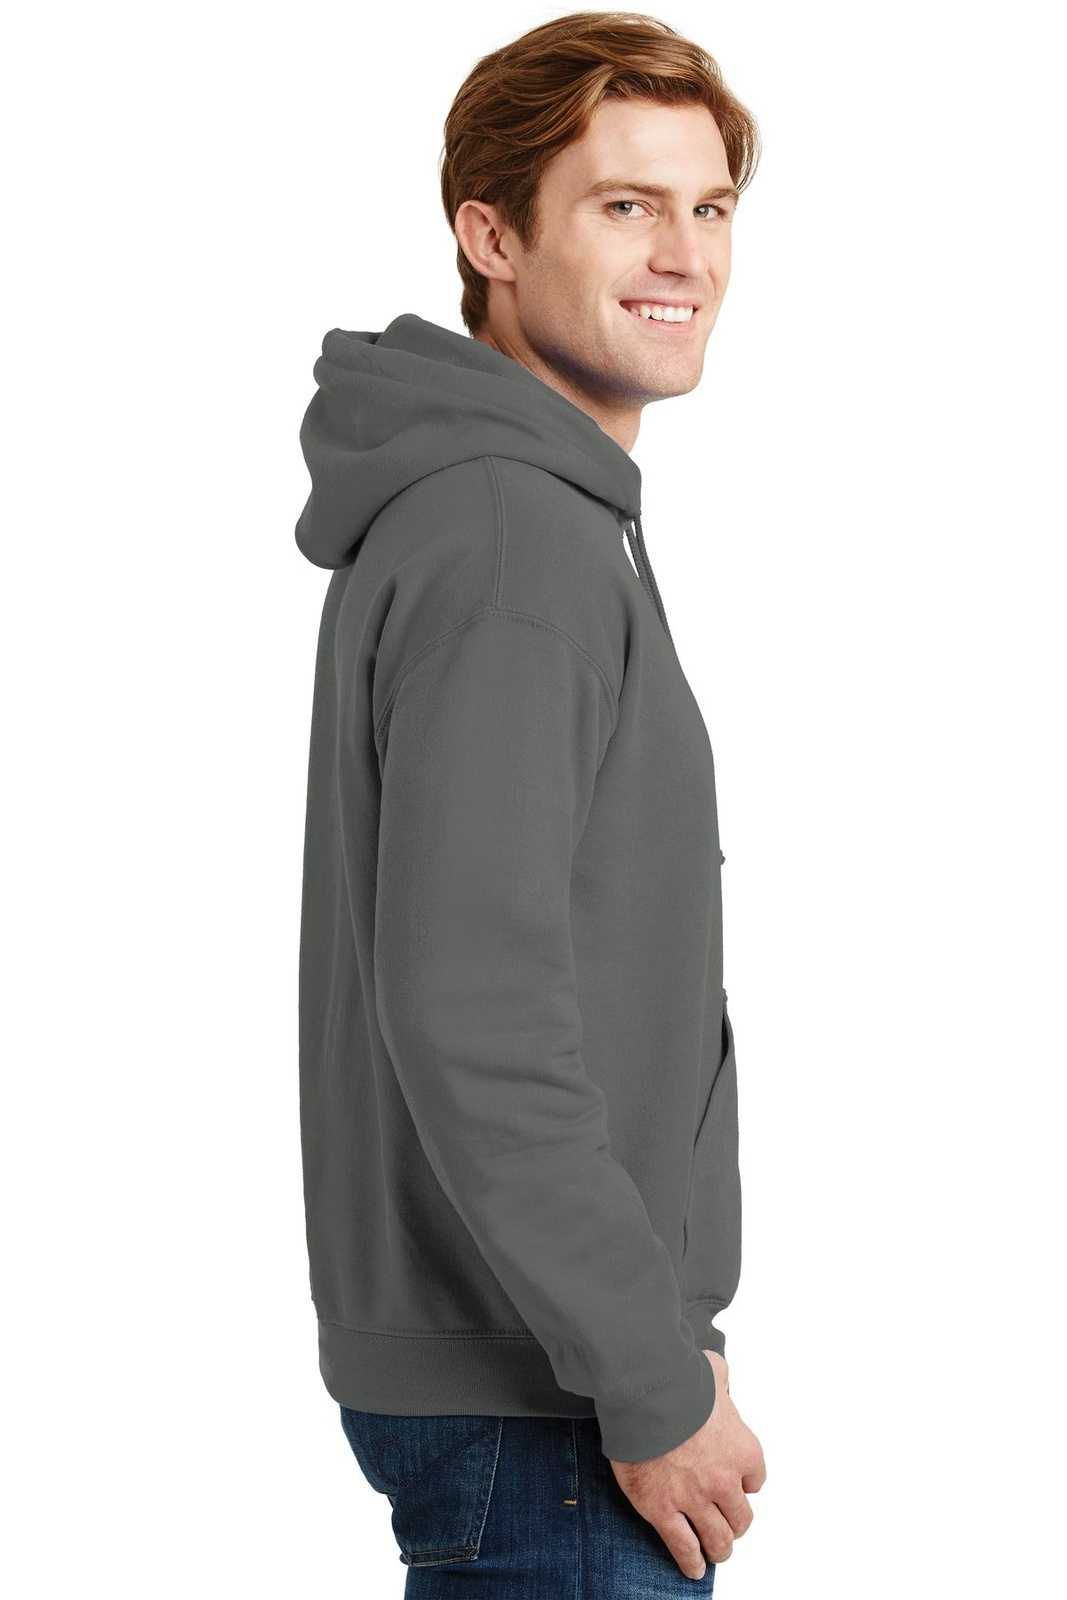 Gildan 12500 Dryblend Pullover Hooded Sweatshirt - Charcoal - HIT a Double